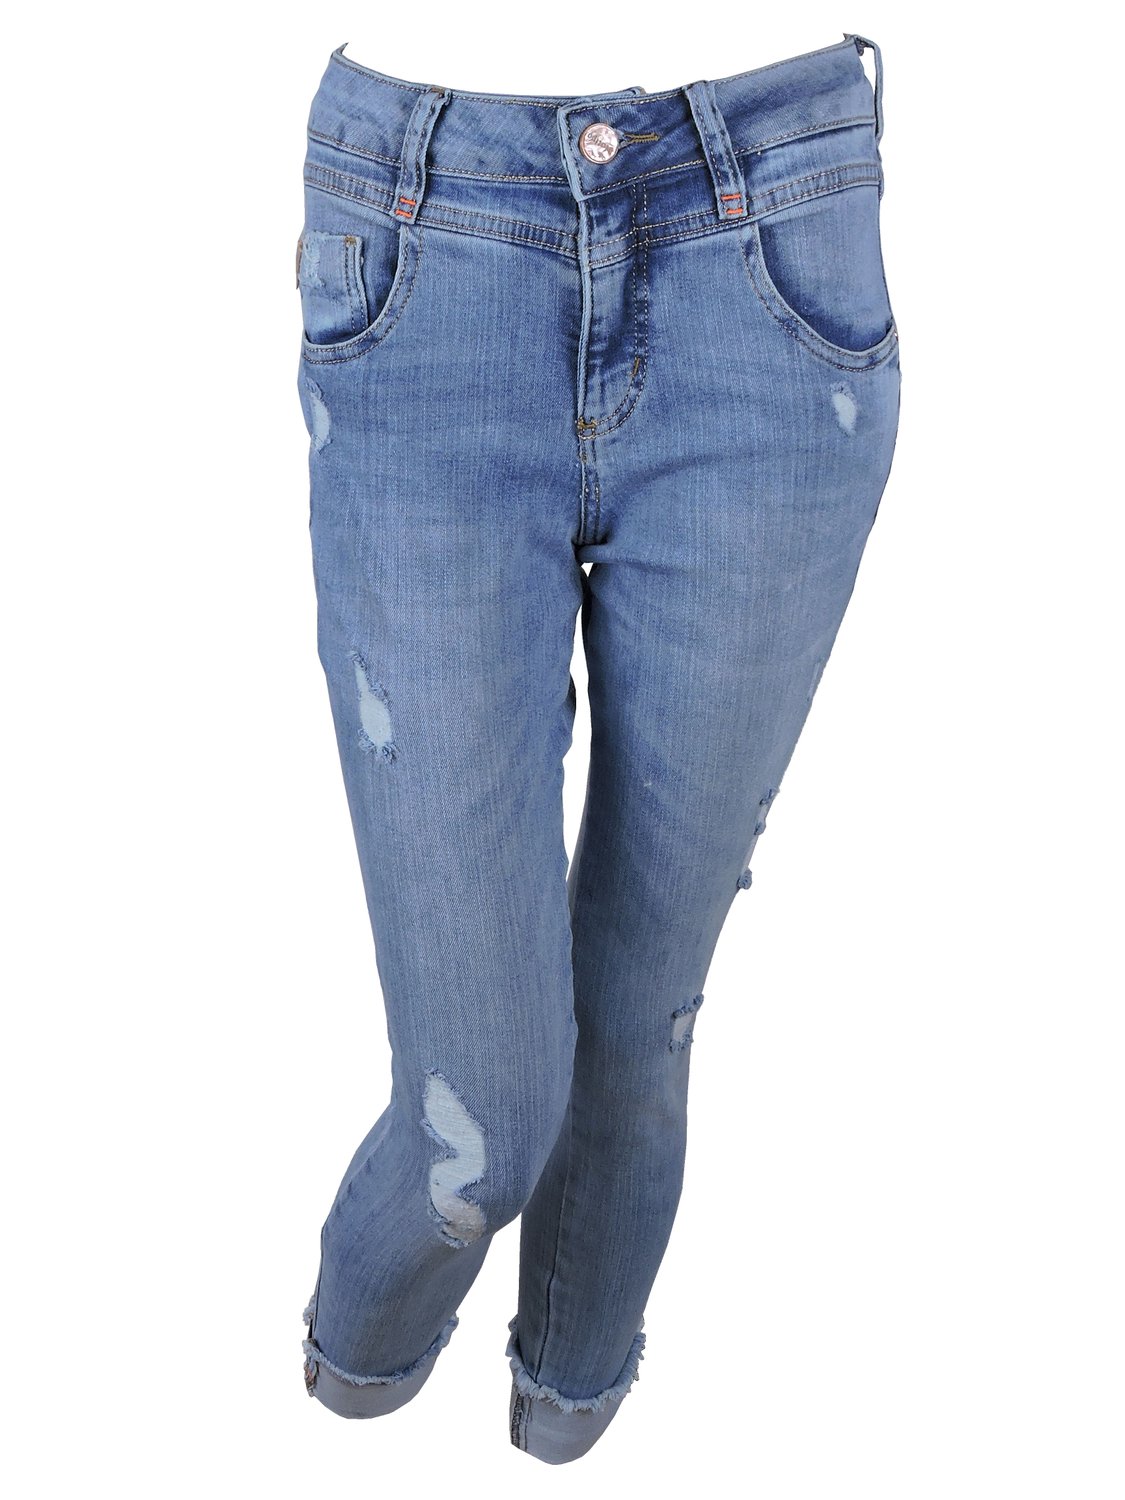 https://static.ferju.com.br/public/ferju/imagens/produtos/calca-jeans-feminino-adulto-skinny-com-elastano-lixado-26963-biotipo-jeans-38-8440.jpg